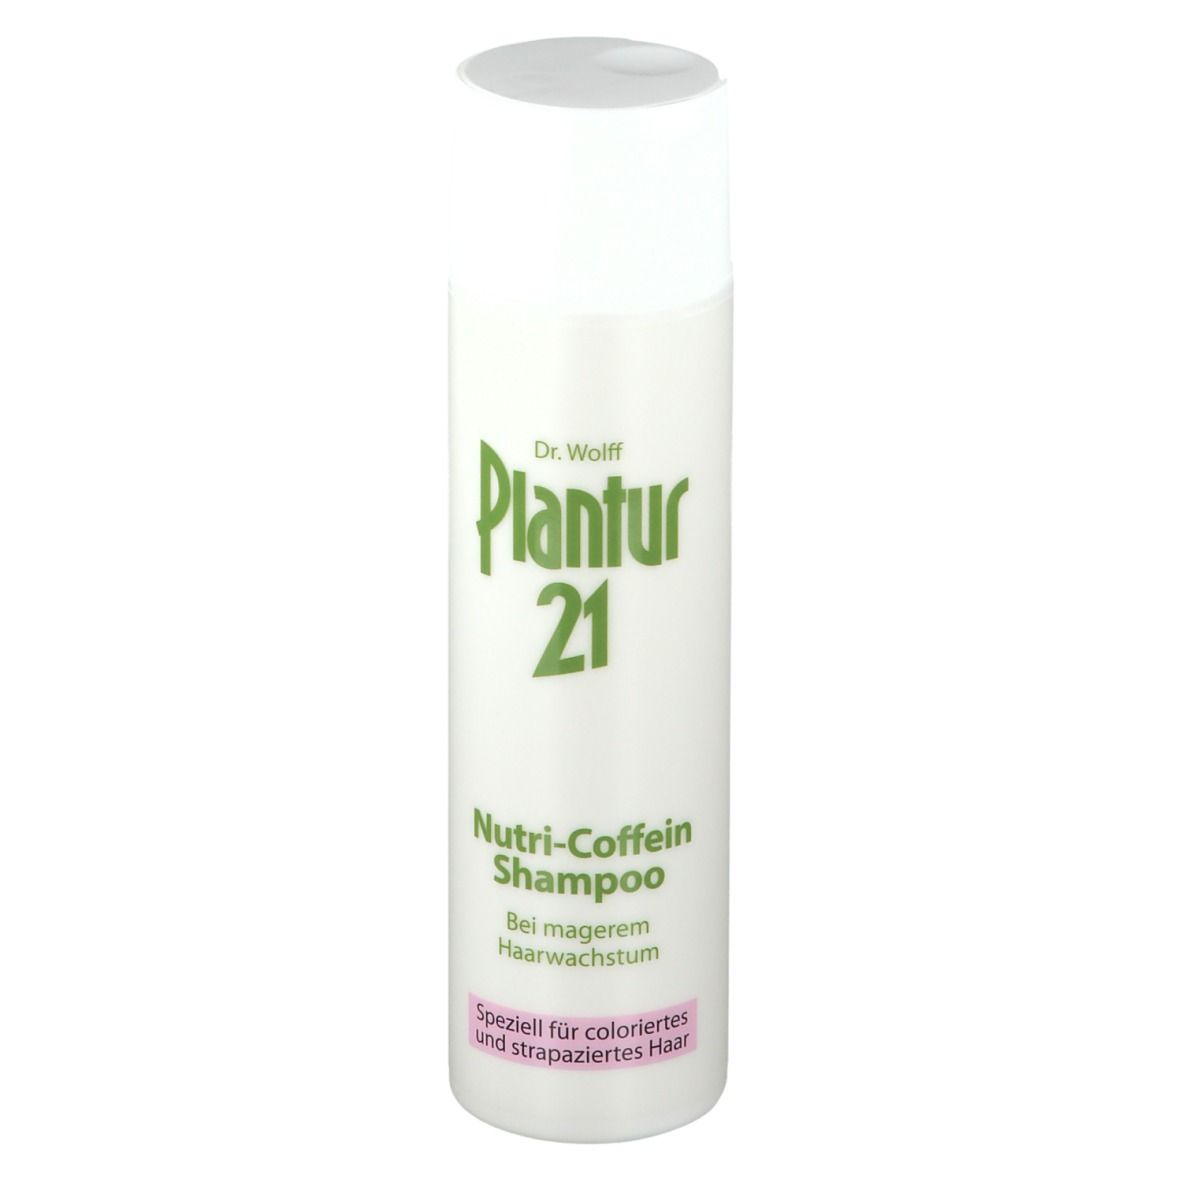 Image of Plantur21 Nutri-Coffein-Shampoo